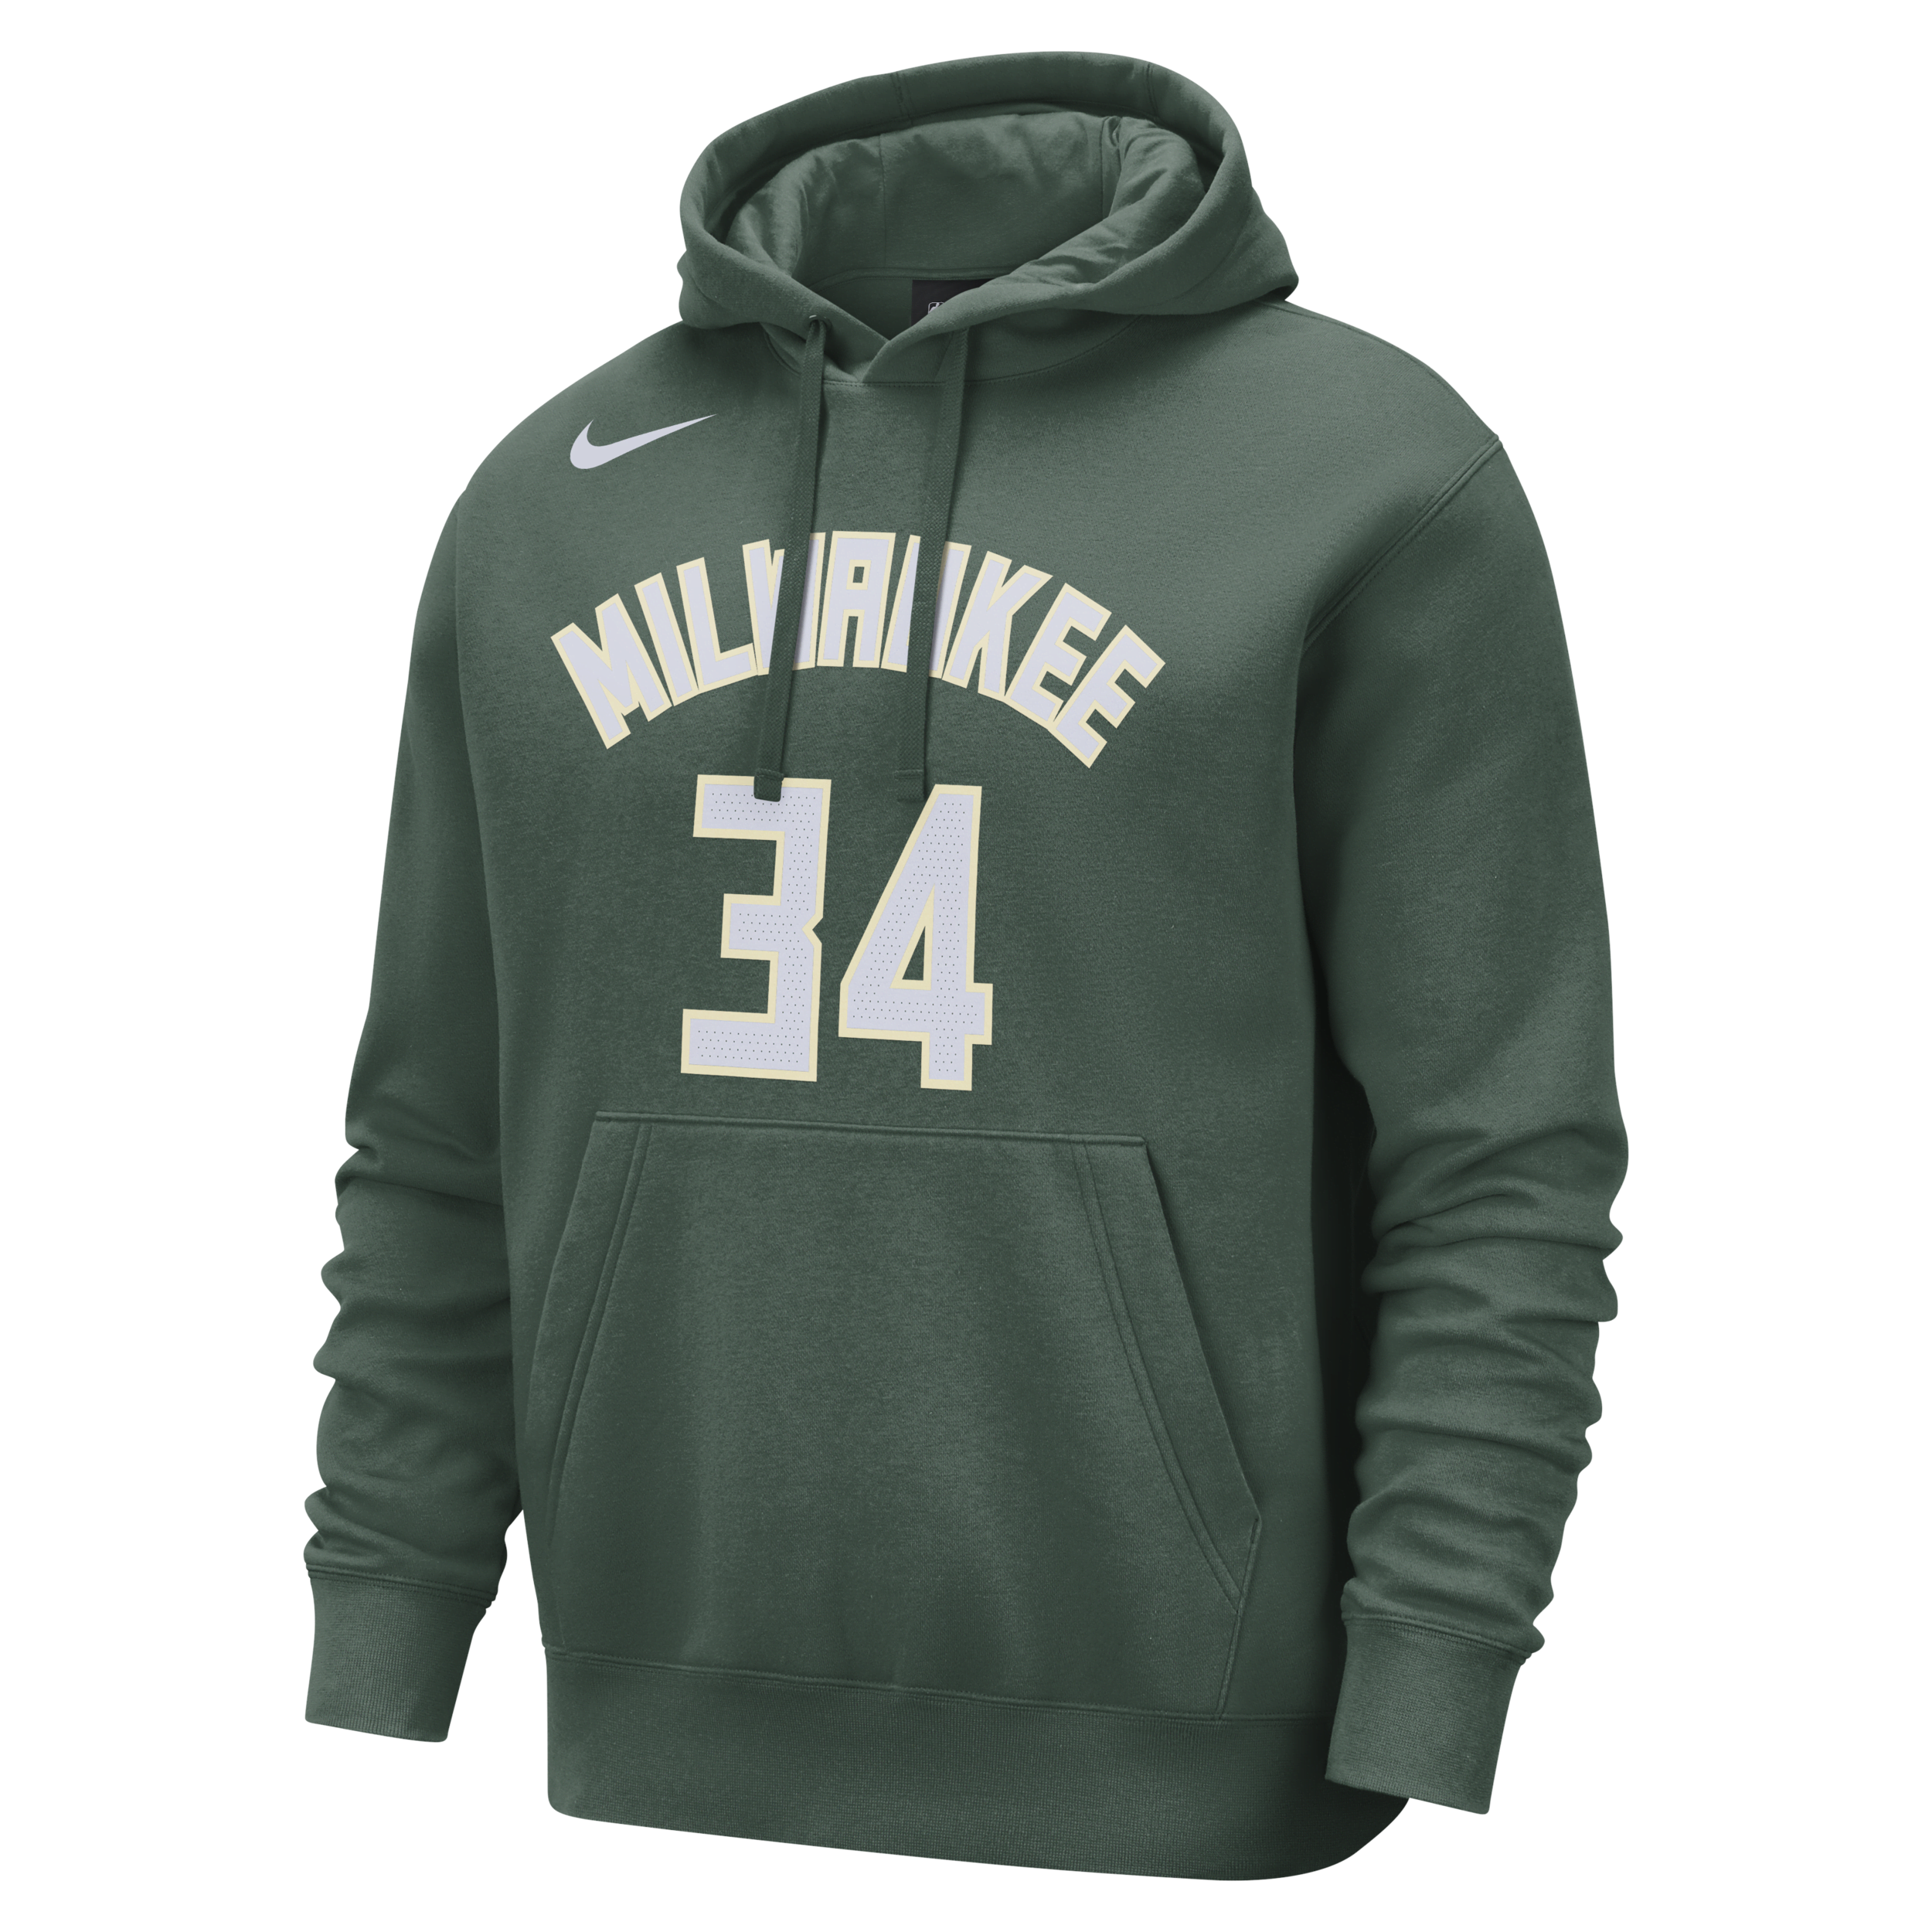 Felpa pullover con cappuccio Milwaukee Bucks Club Nike NBA – Uomo - Verde